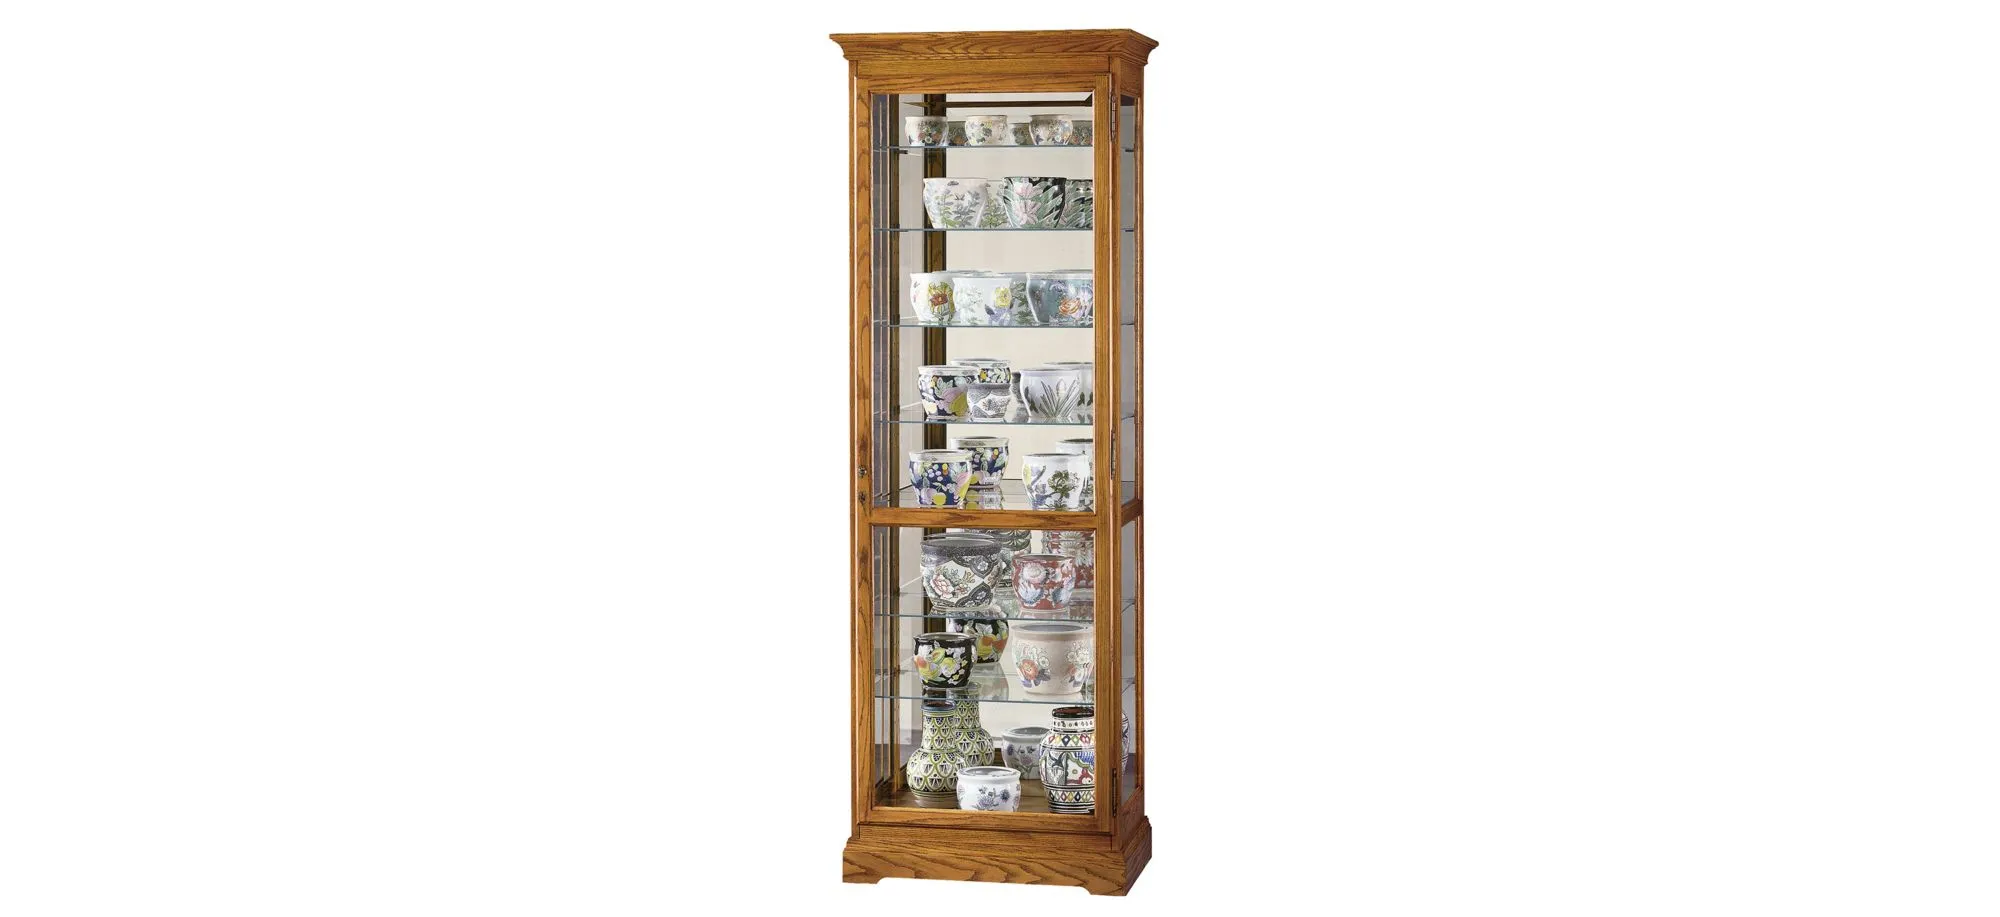 Chesterfield Curio Cabinet in Golden Oak by Howard Miller Clock